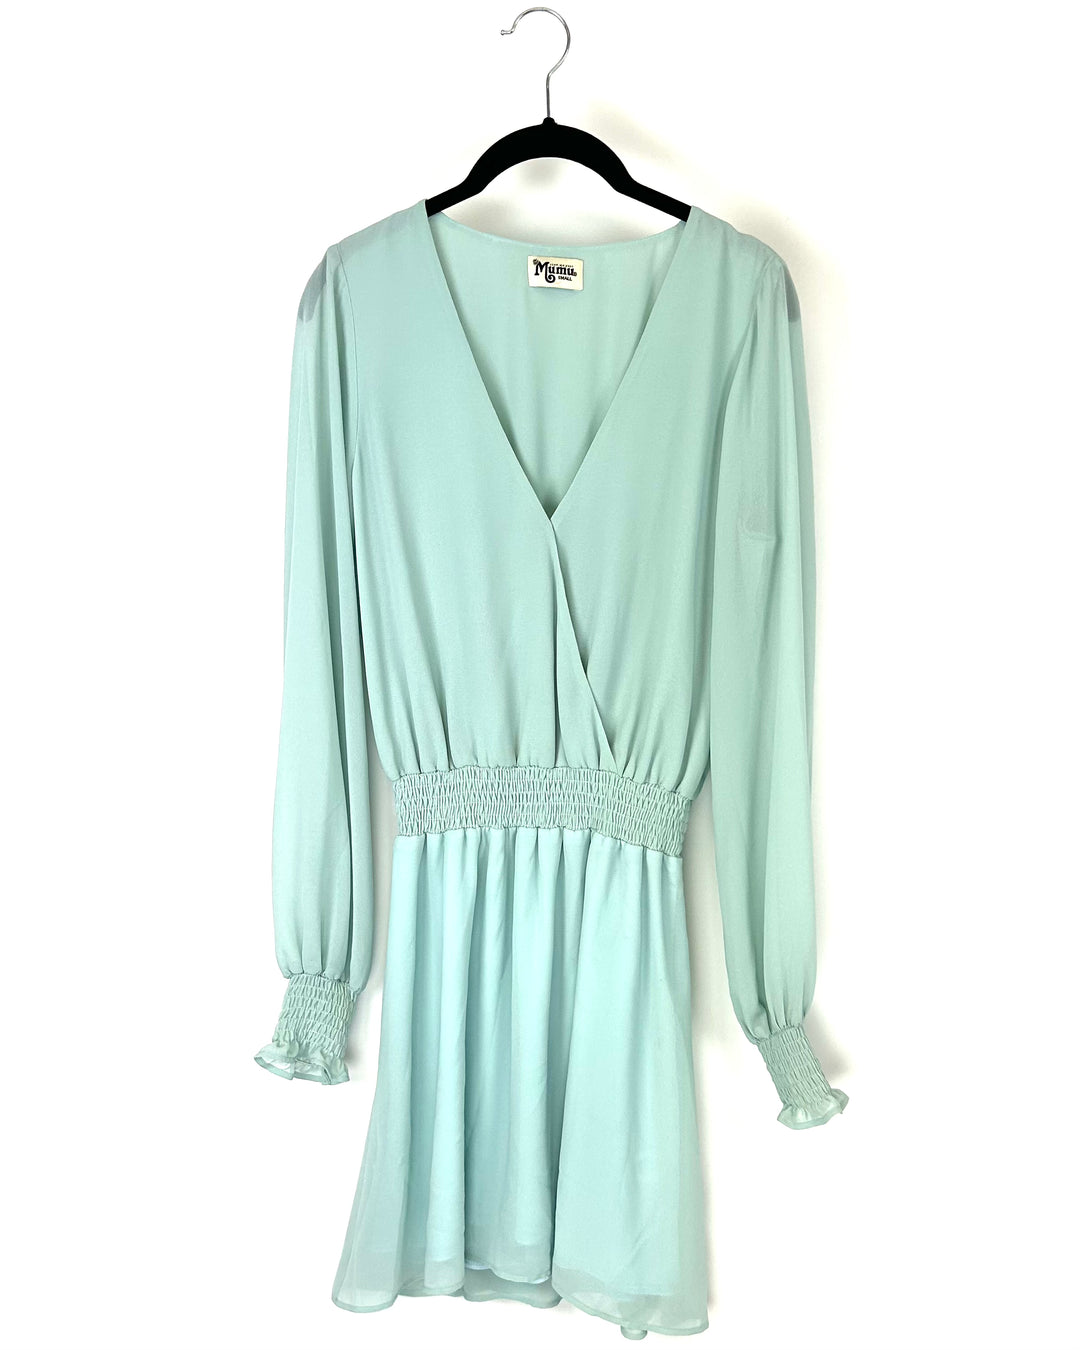 Seafoam Green Long-sleeve Dress - Small